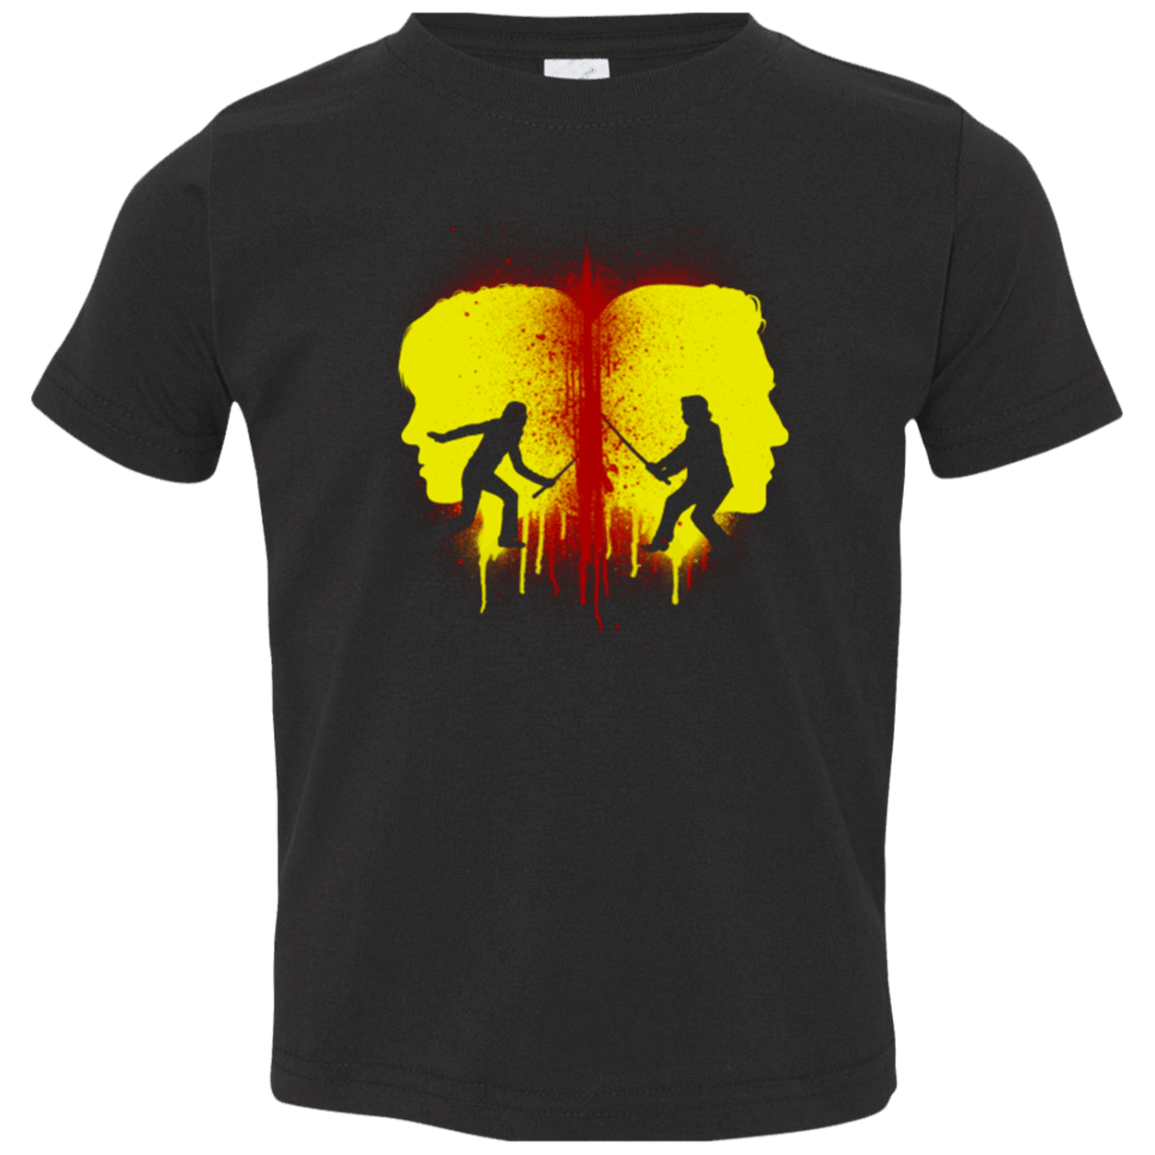 T-Shirts Black / 2T Kill Bill Silhouettes Toddler Premium T-Shirt